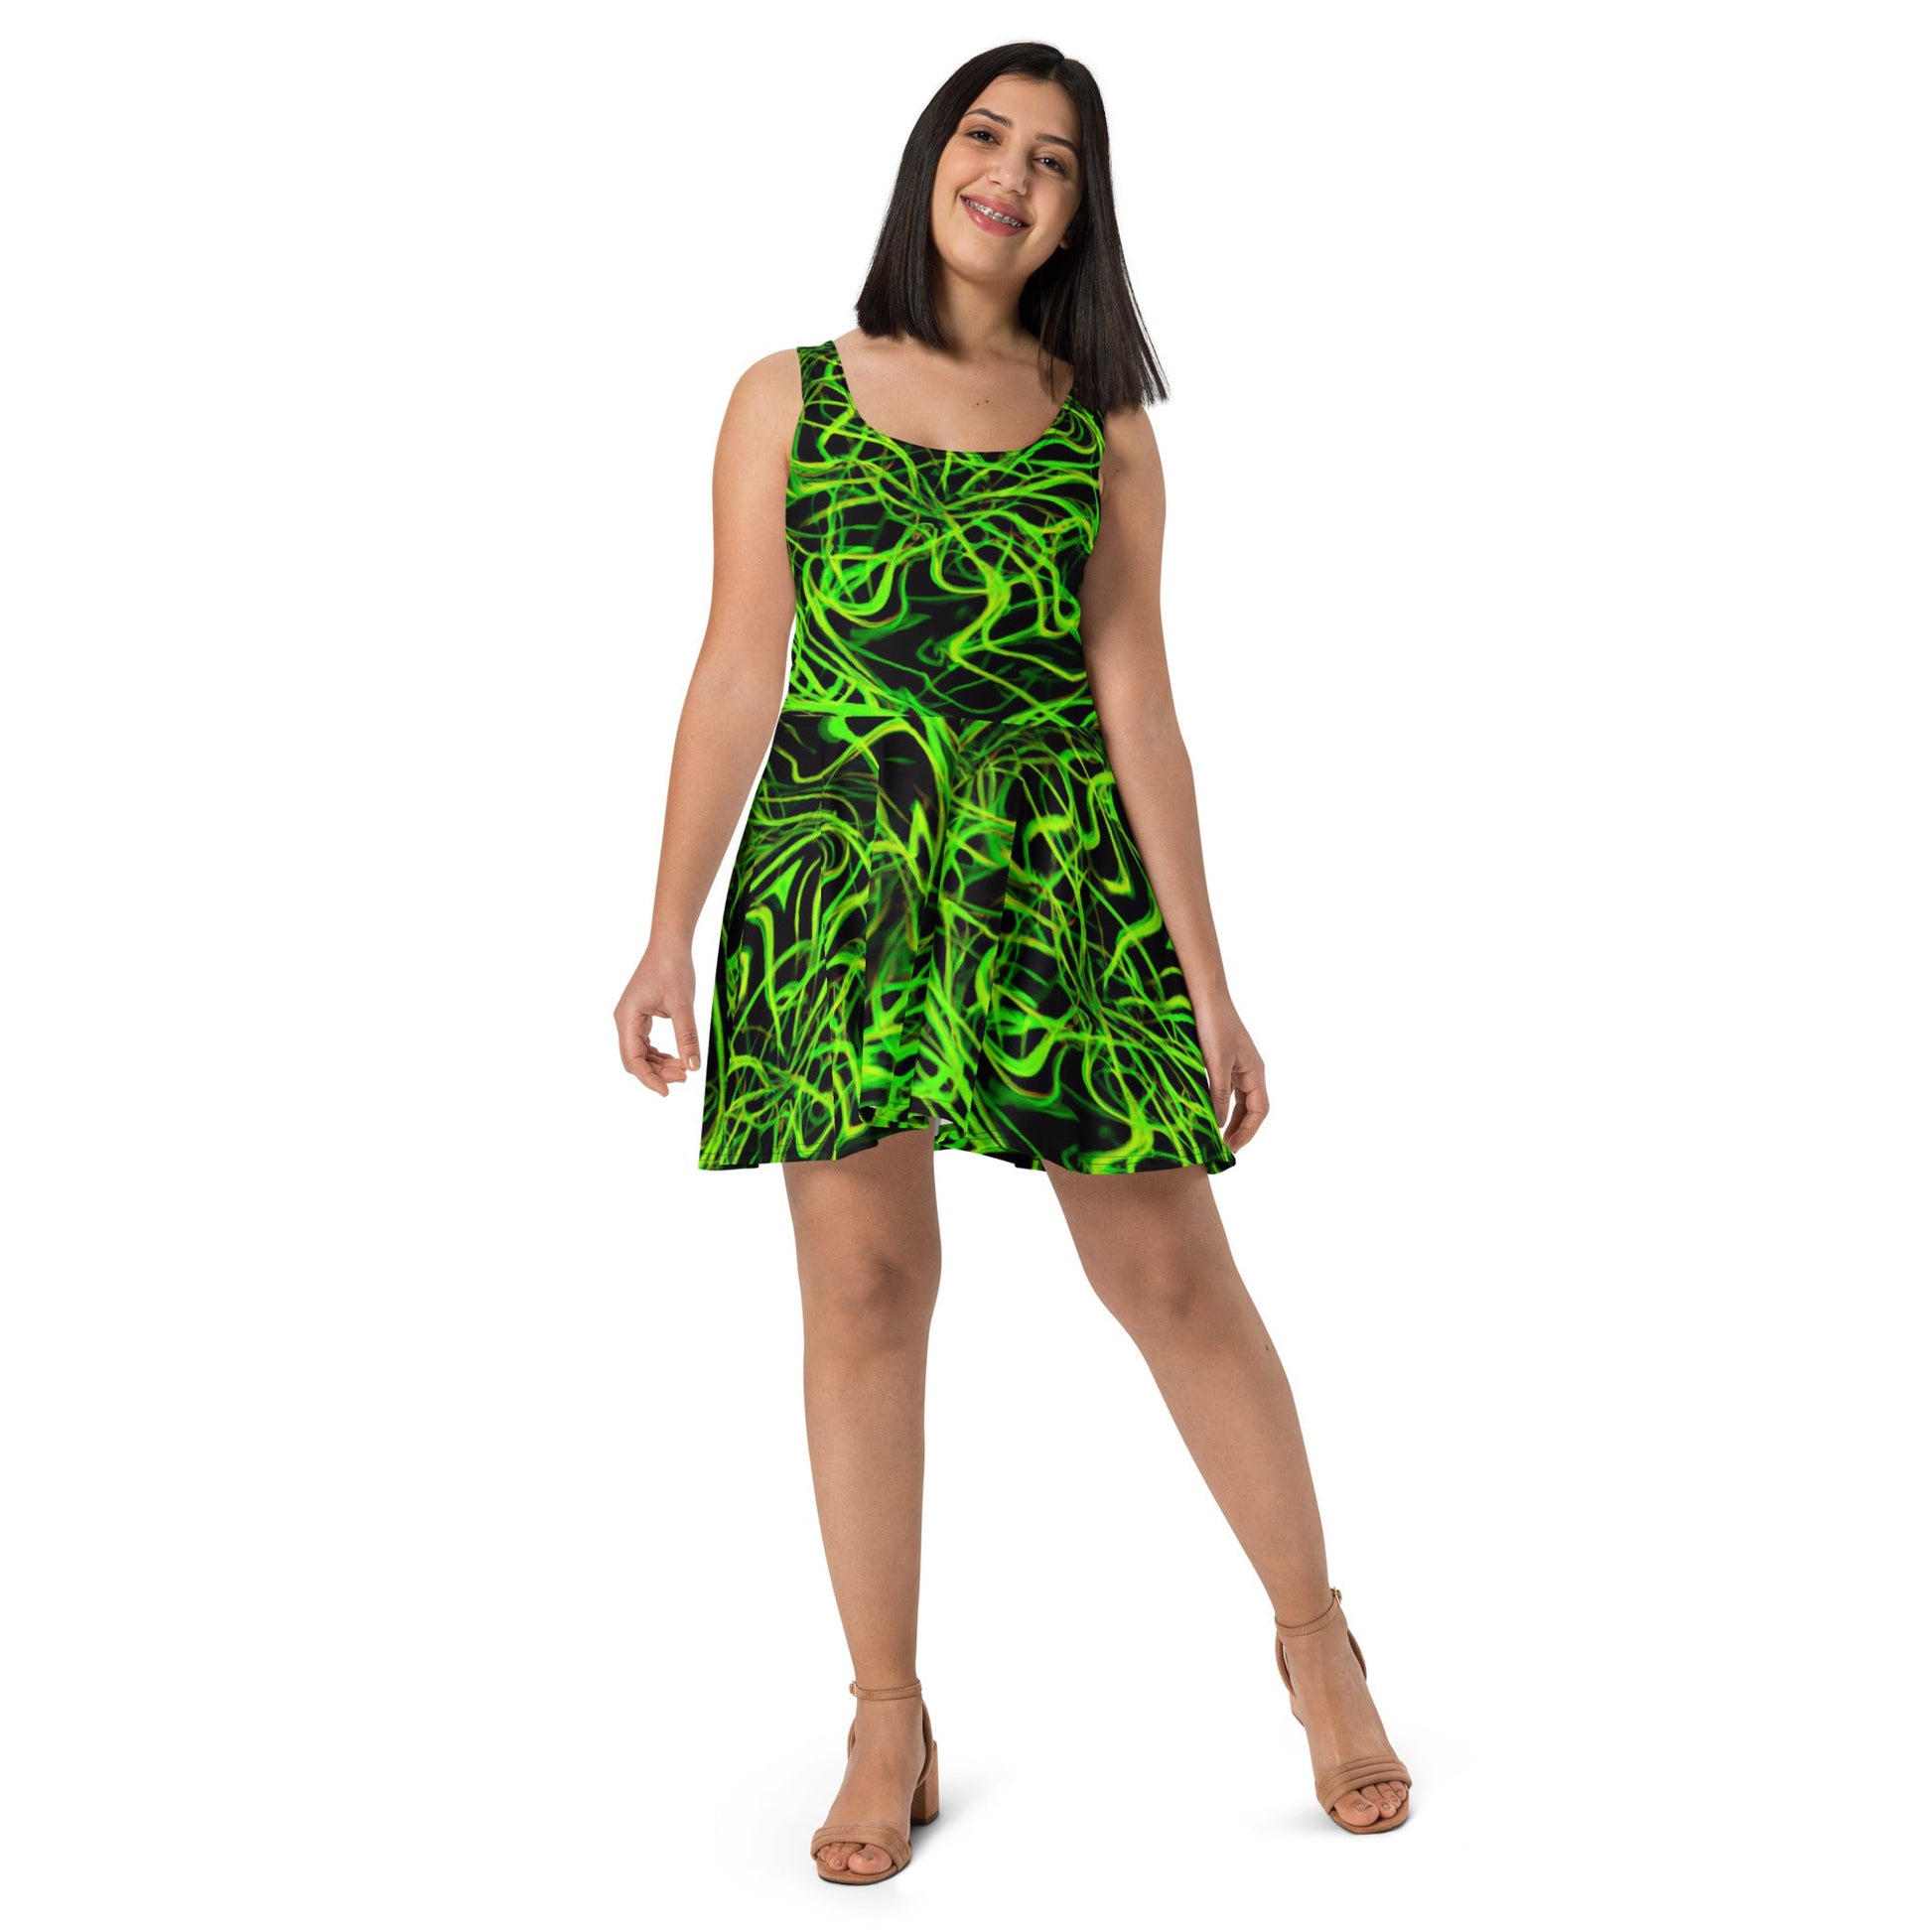 Dazzlingly Vibrant Sleeveless Skater Dress: Embrace Radiant GREEN Styling! - Lizard Vigilante